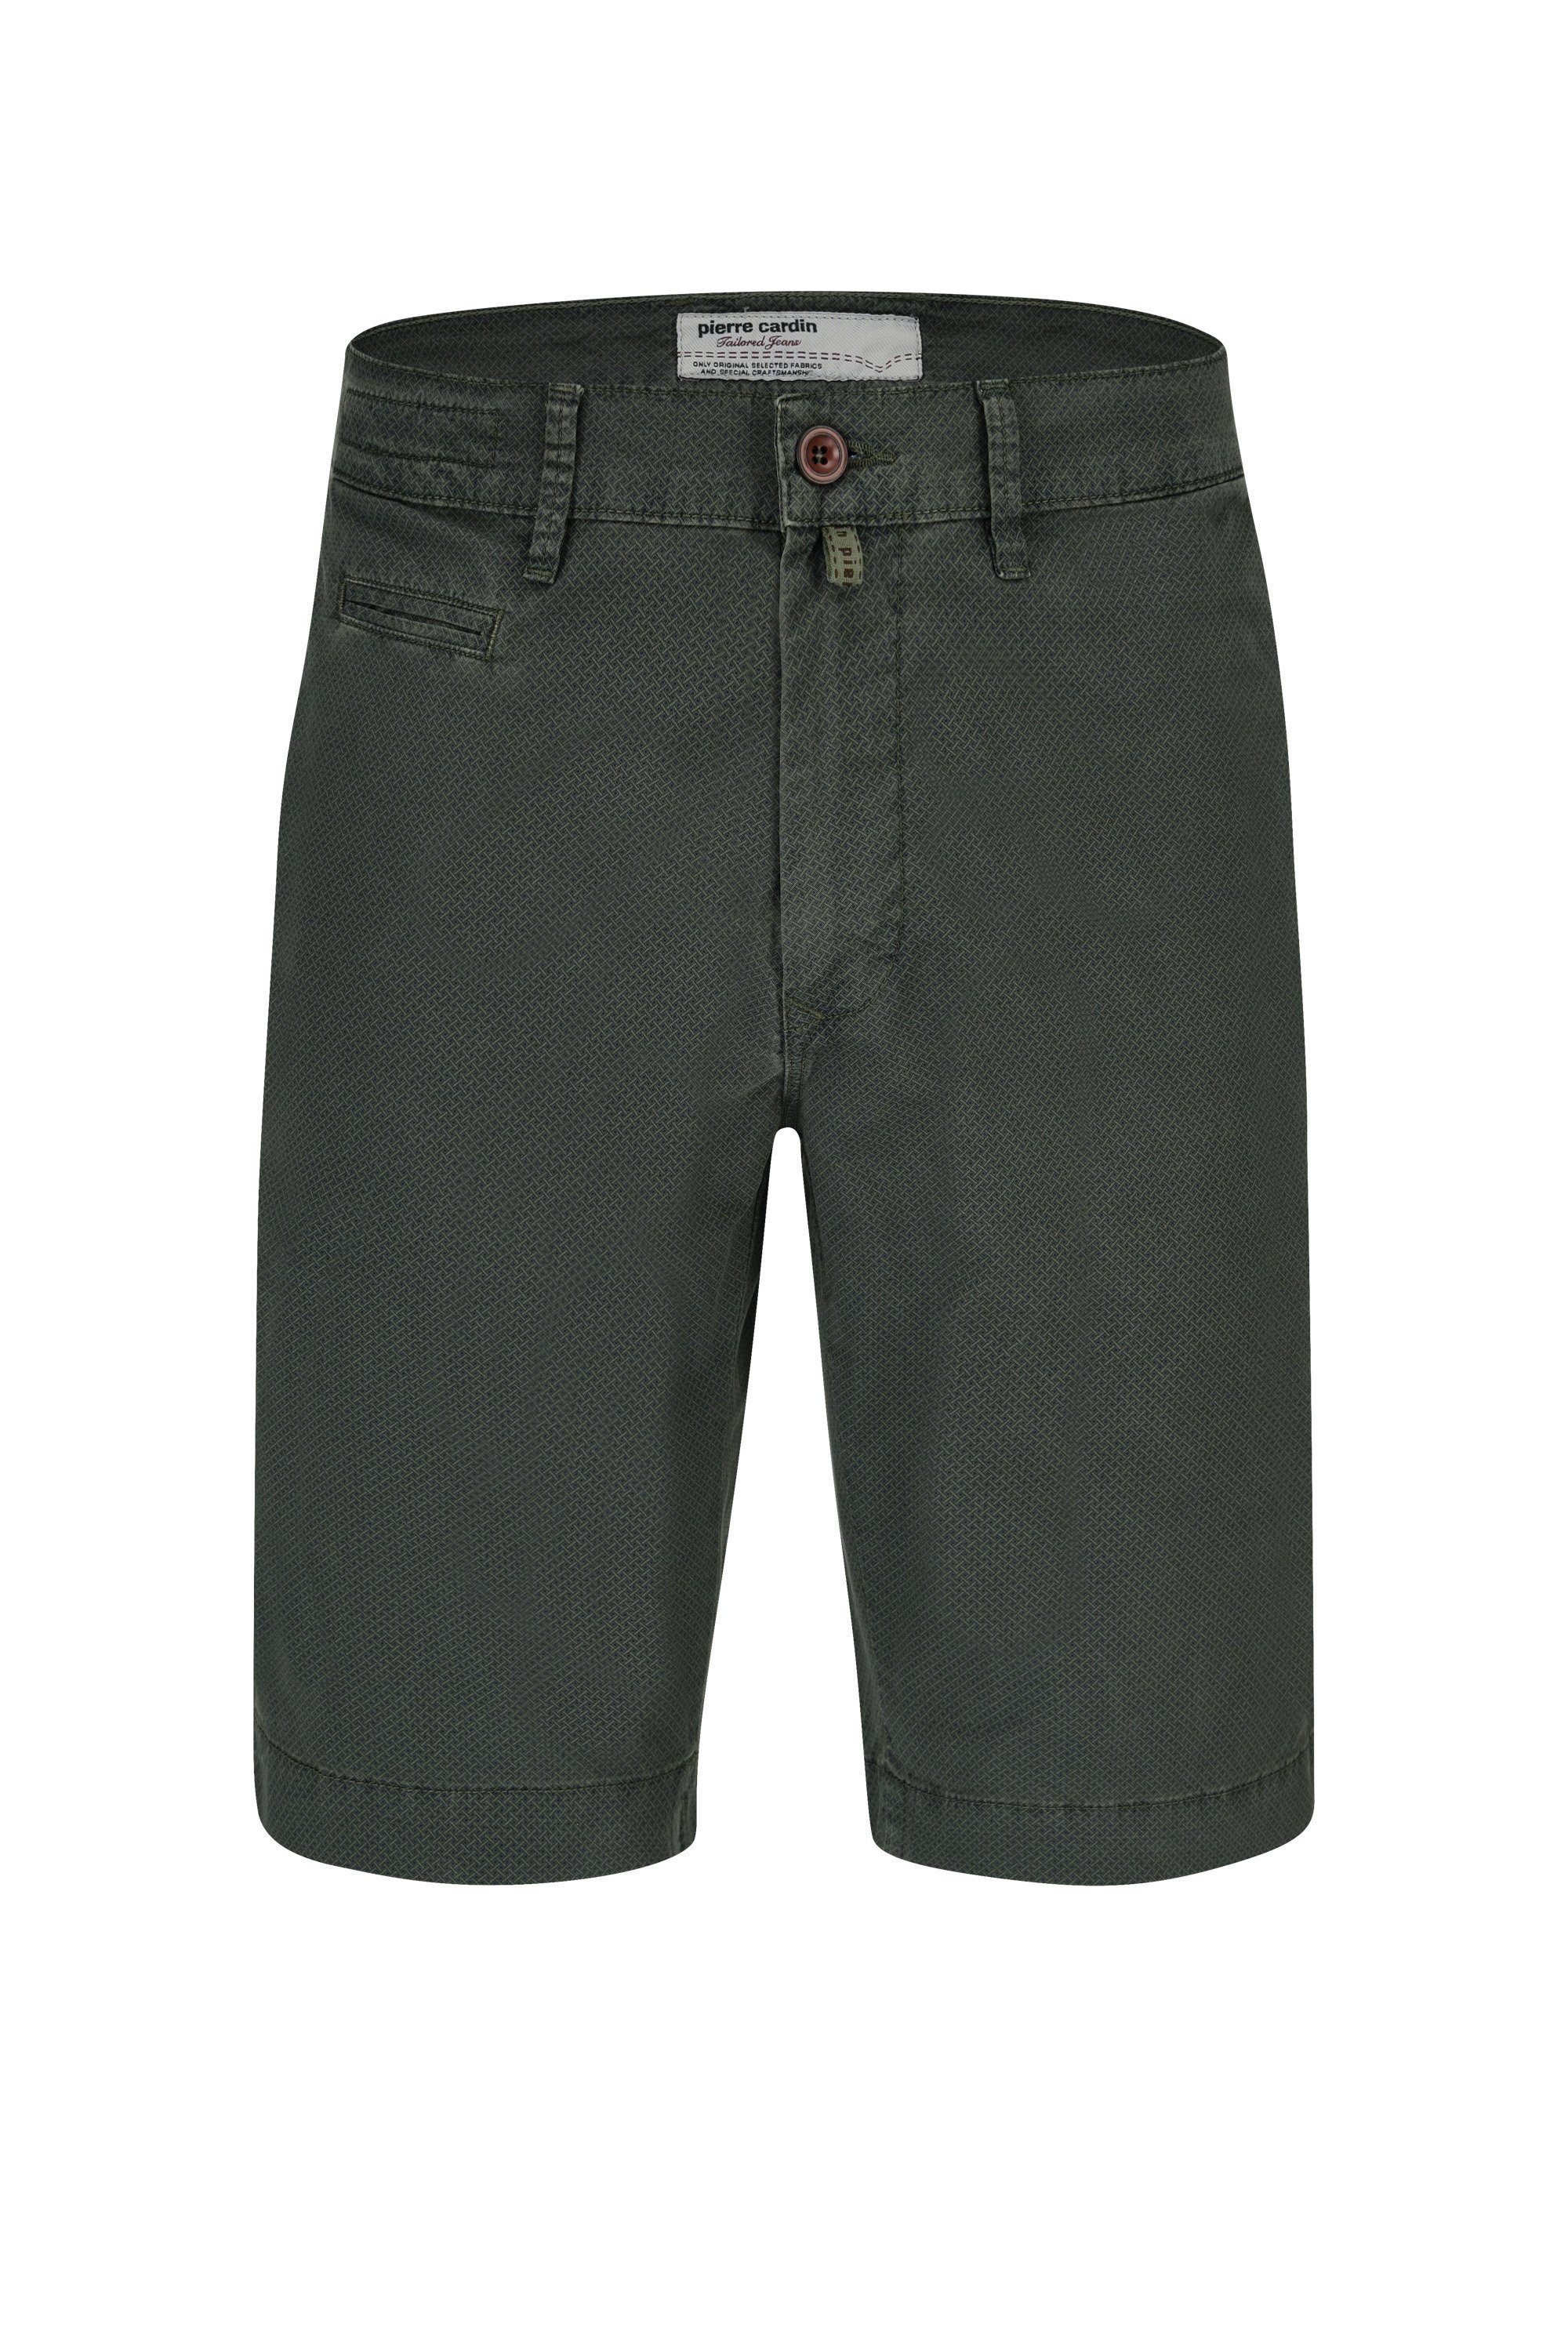 Pierre Cardin green mixed 2060.75 5-Pocket-Jeans 3465 CARDIN SHORTS PIERRE chino LYON